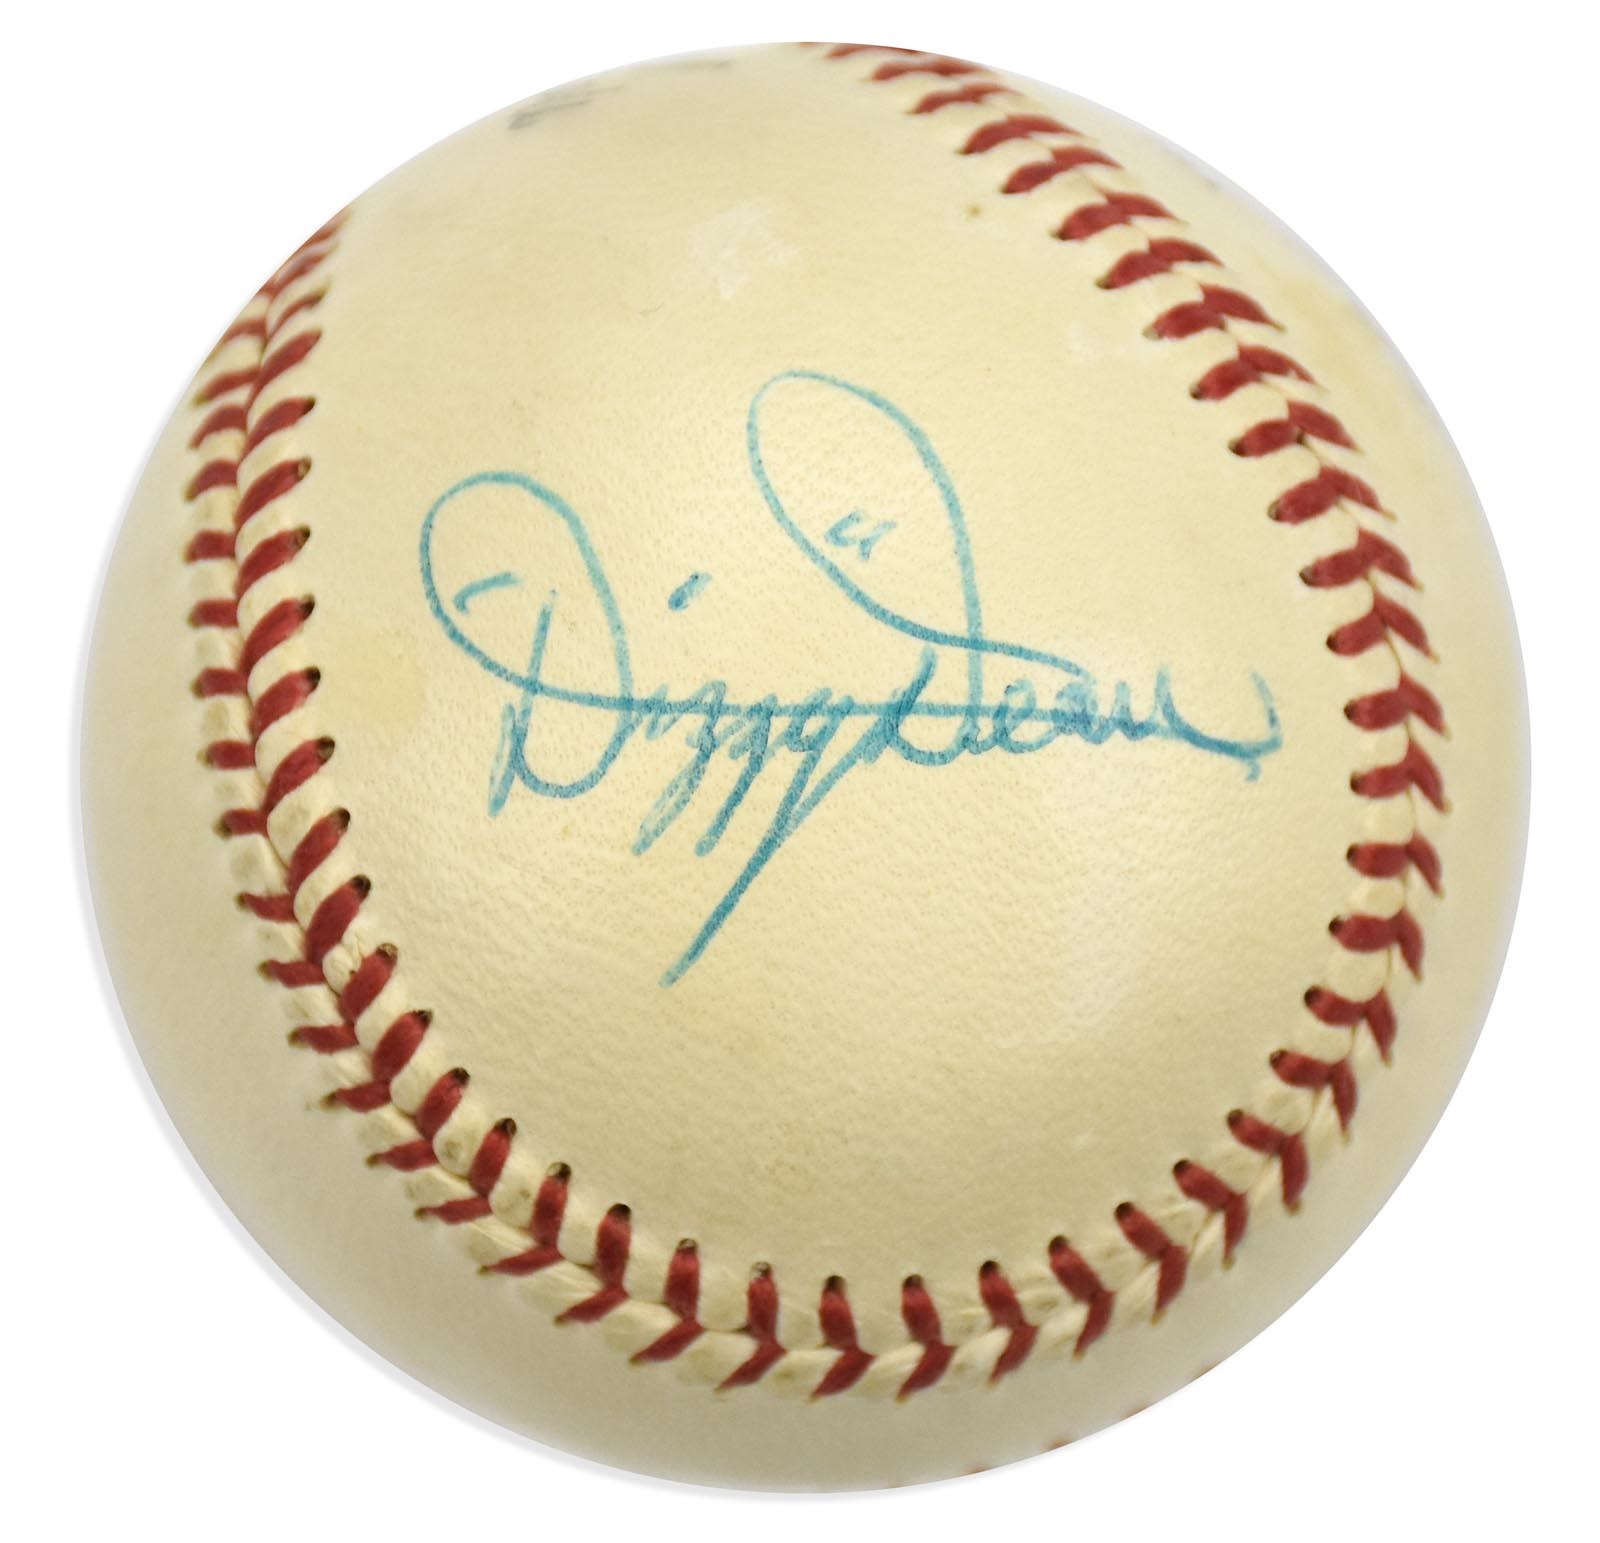 - High Grade Dizzy Dean Single Signed Baseball (PSA NM-MT 8)